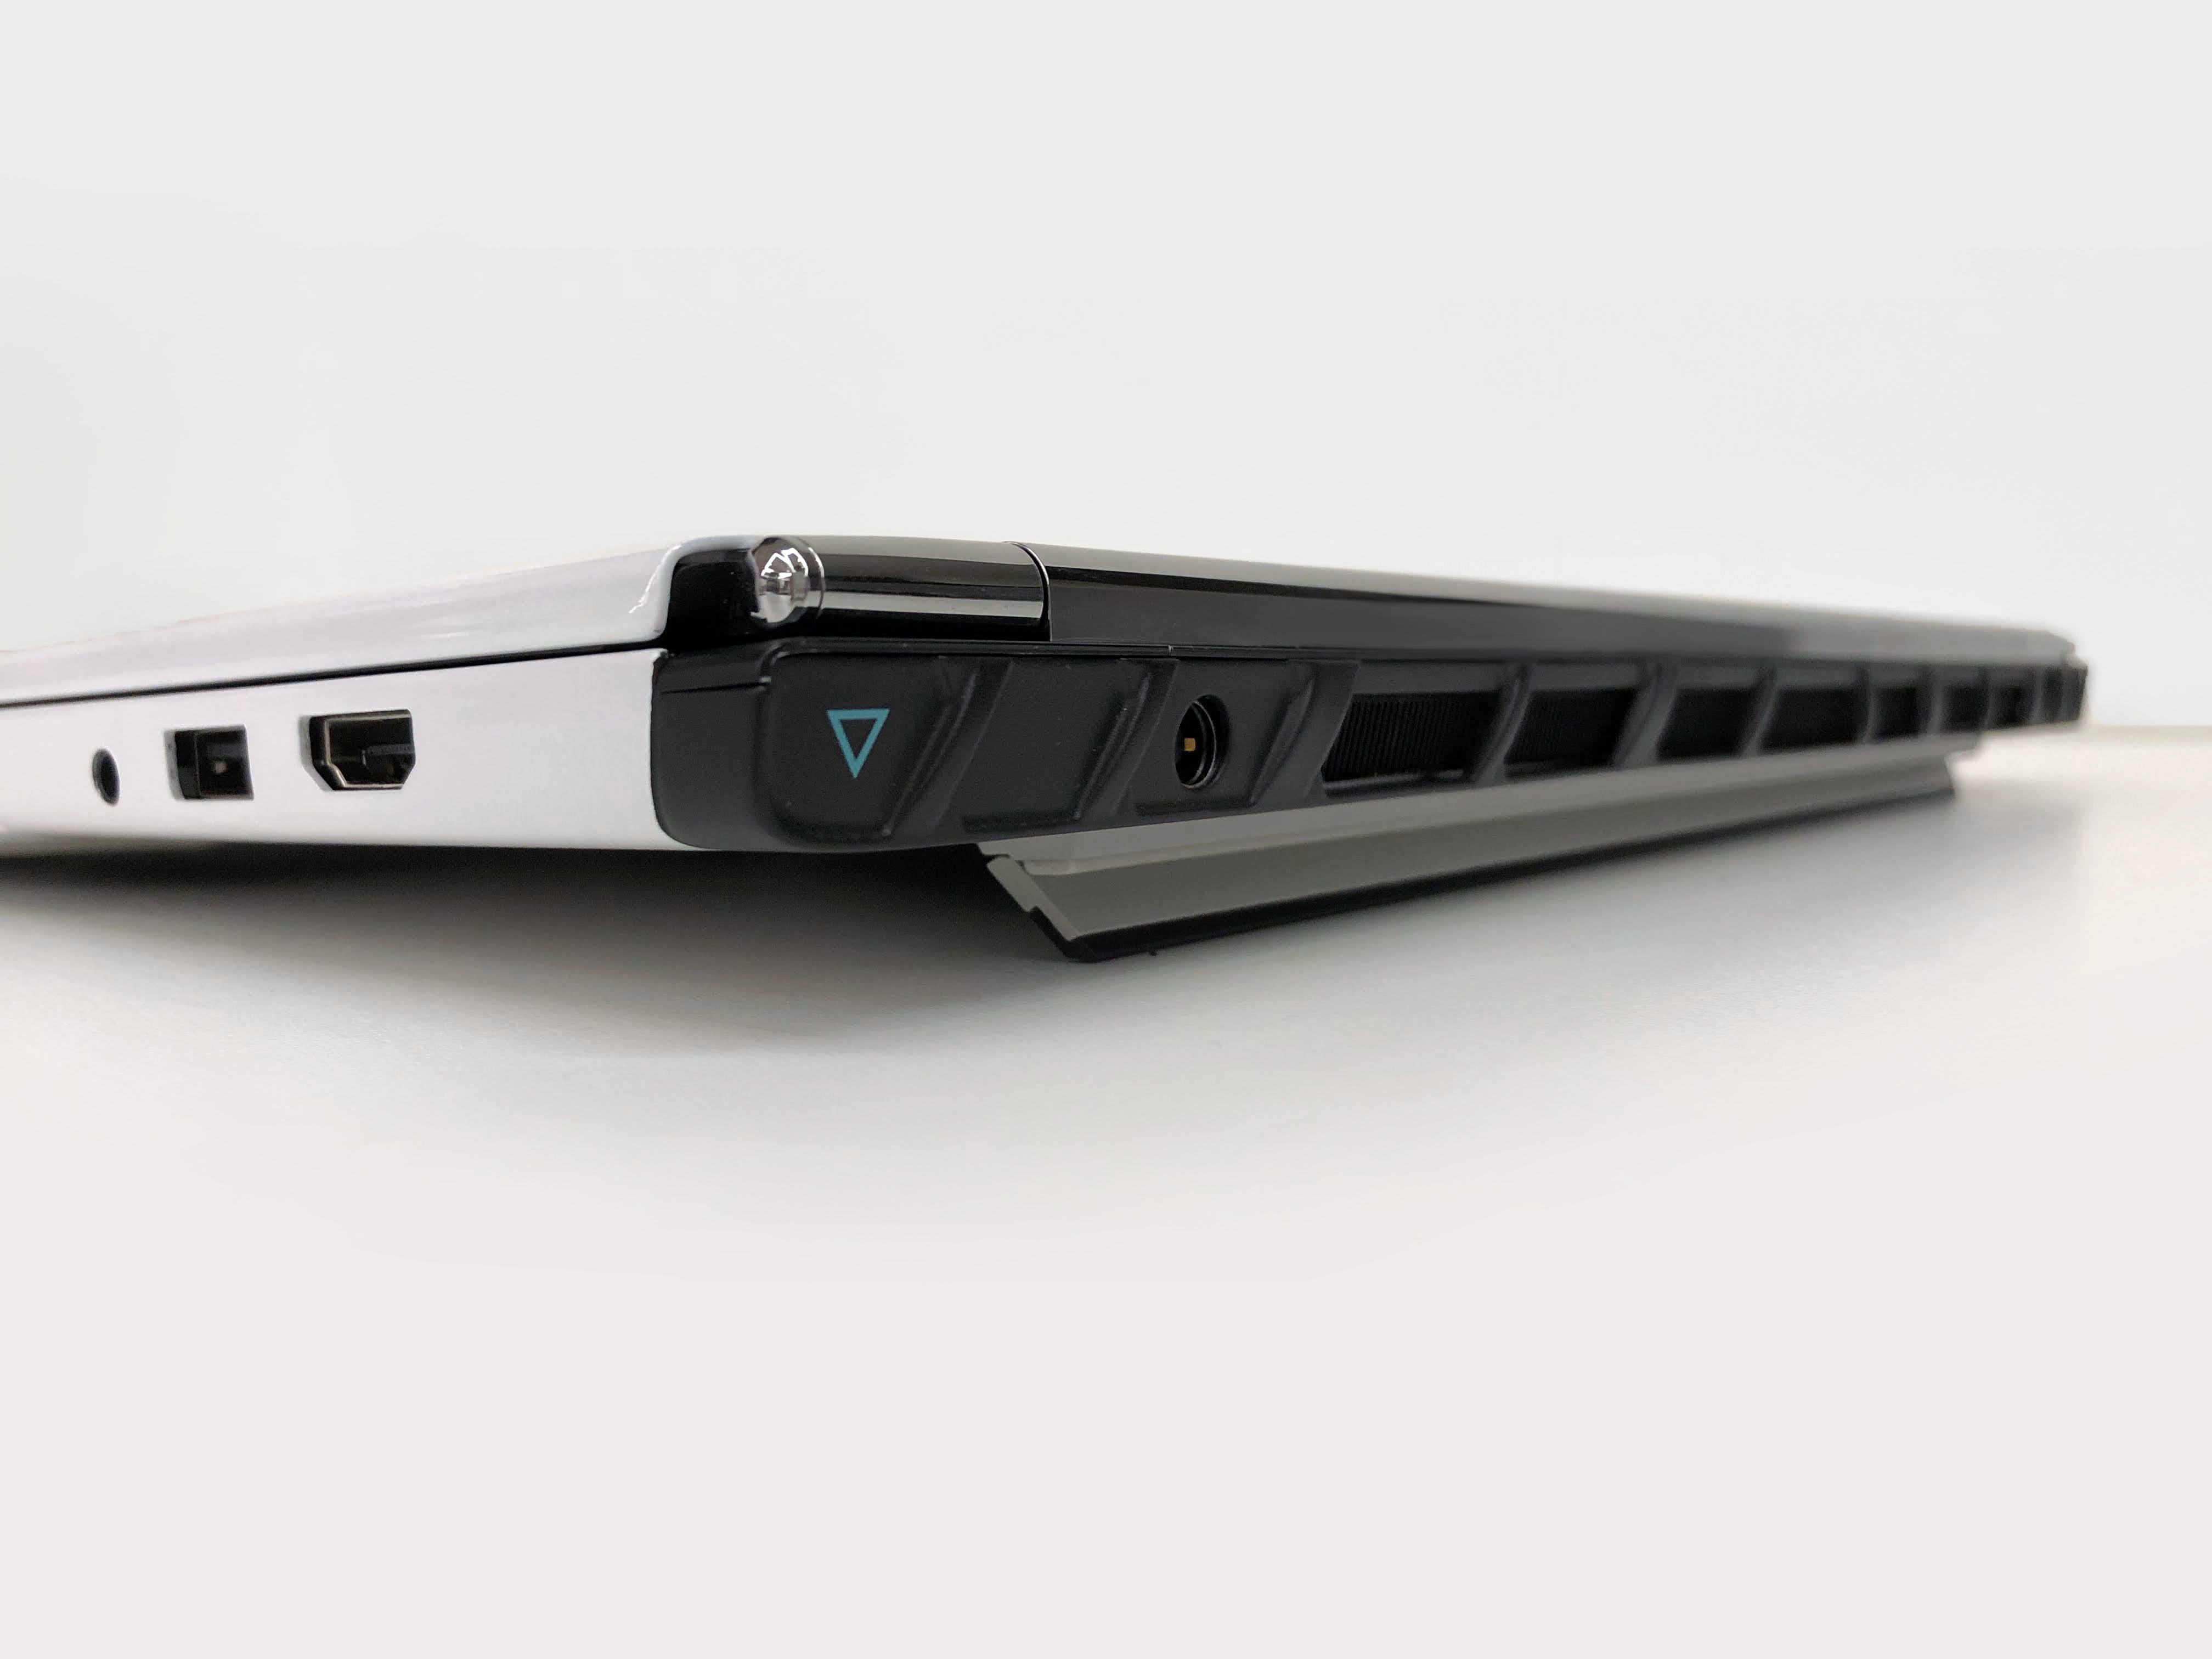 Stormtrak - Ultrathin Laptop of Air Vortex Cooling